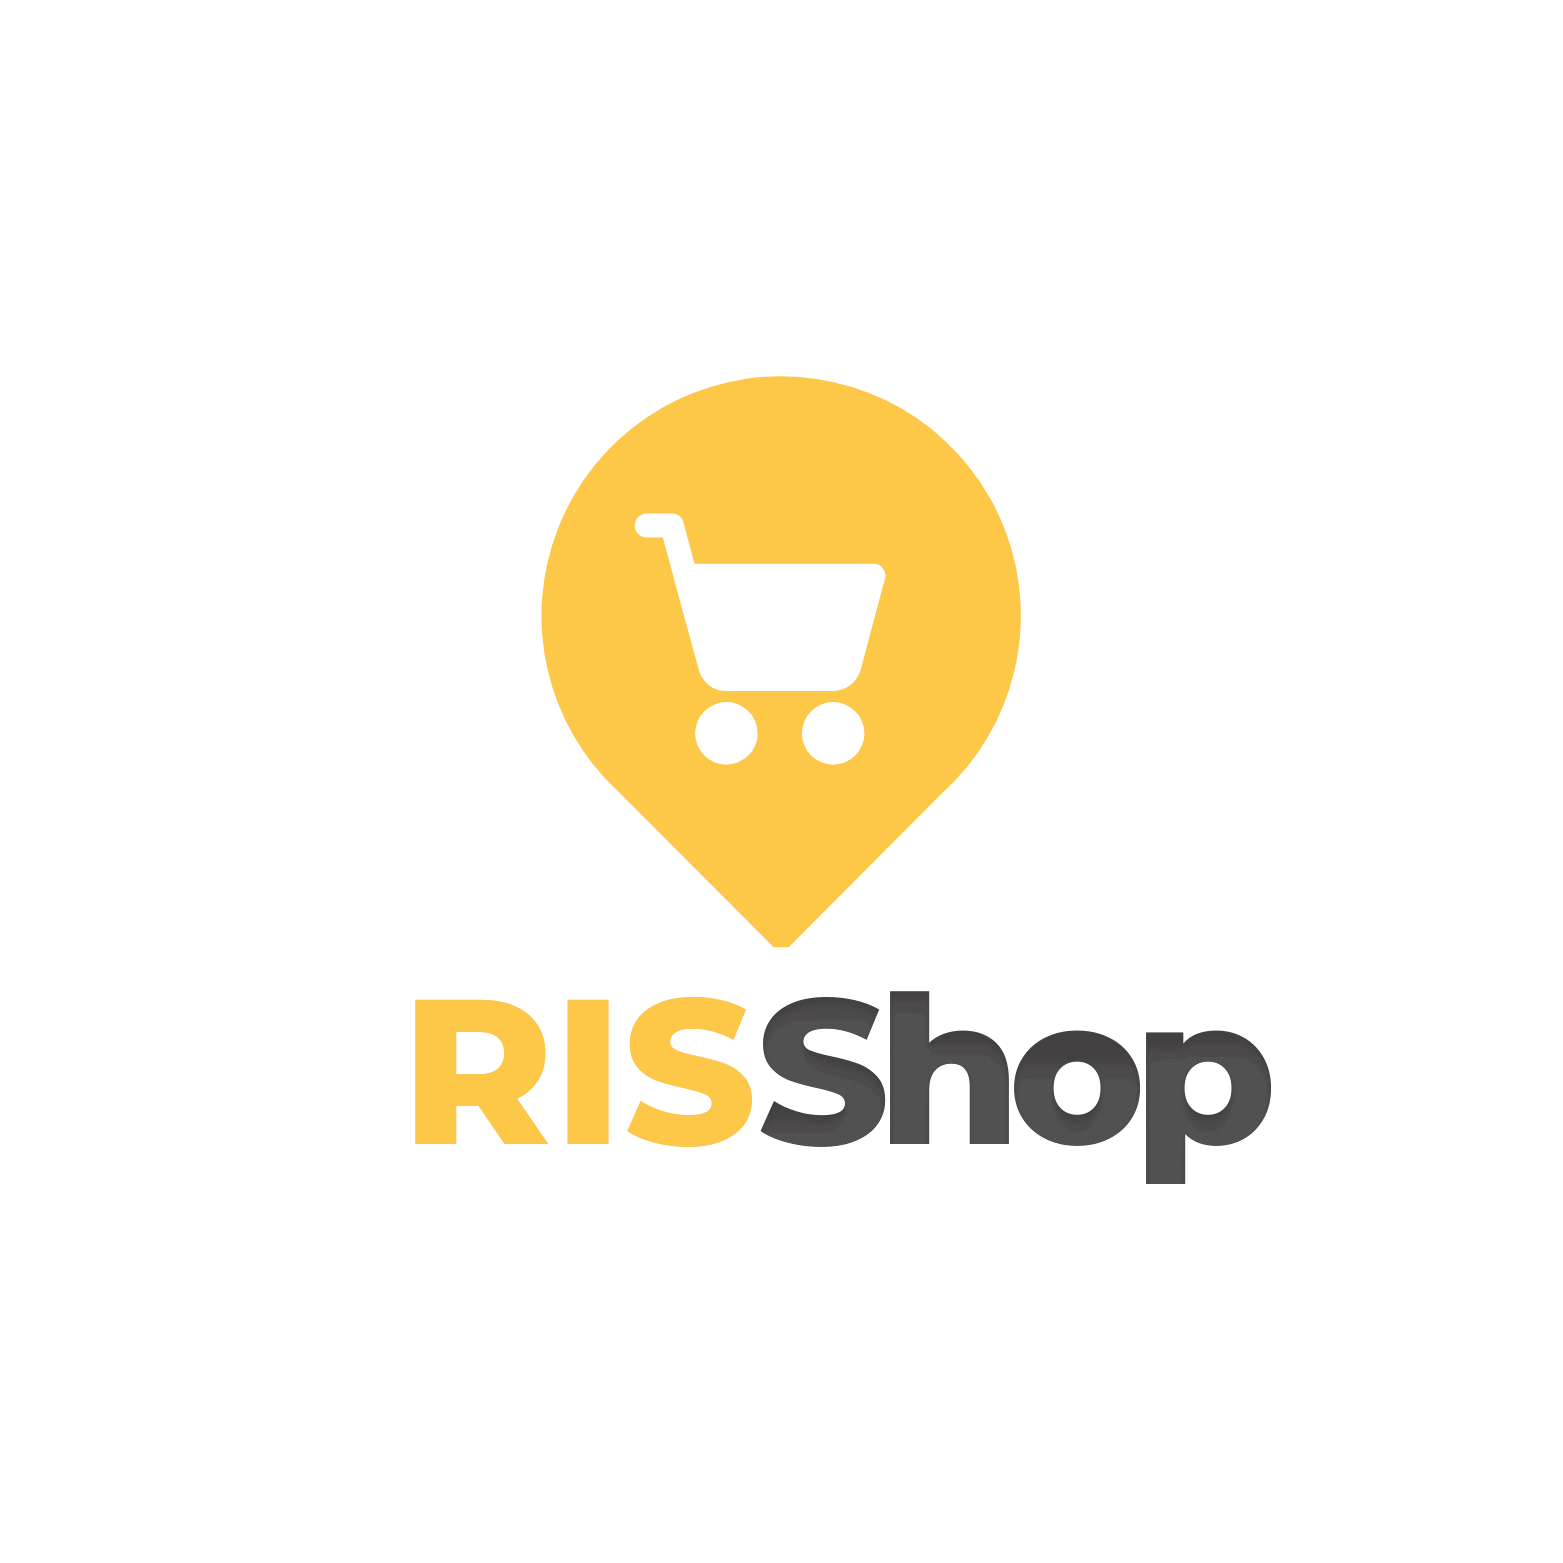 RissShop